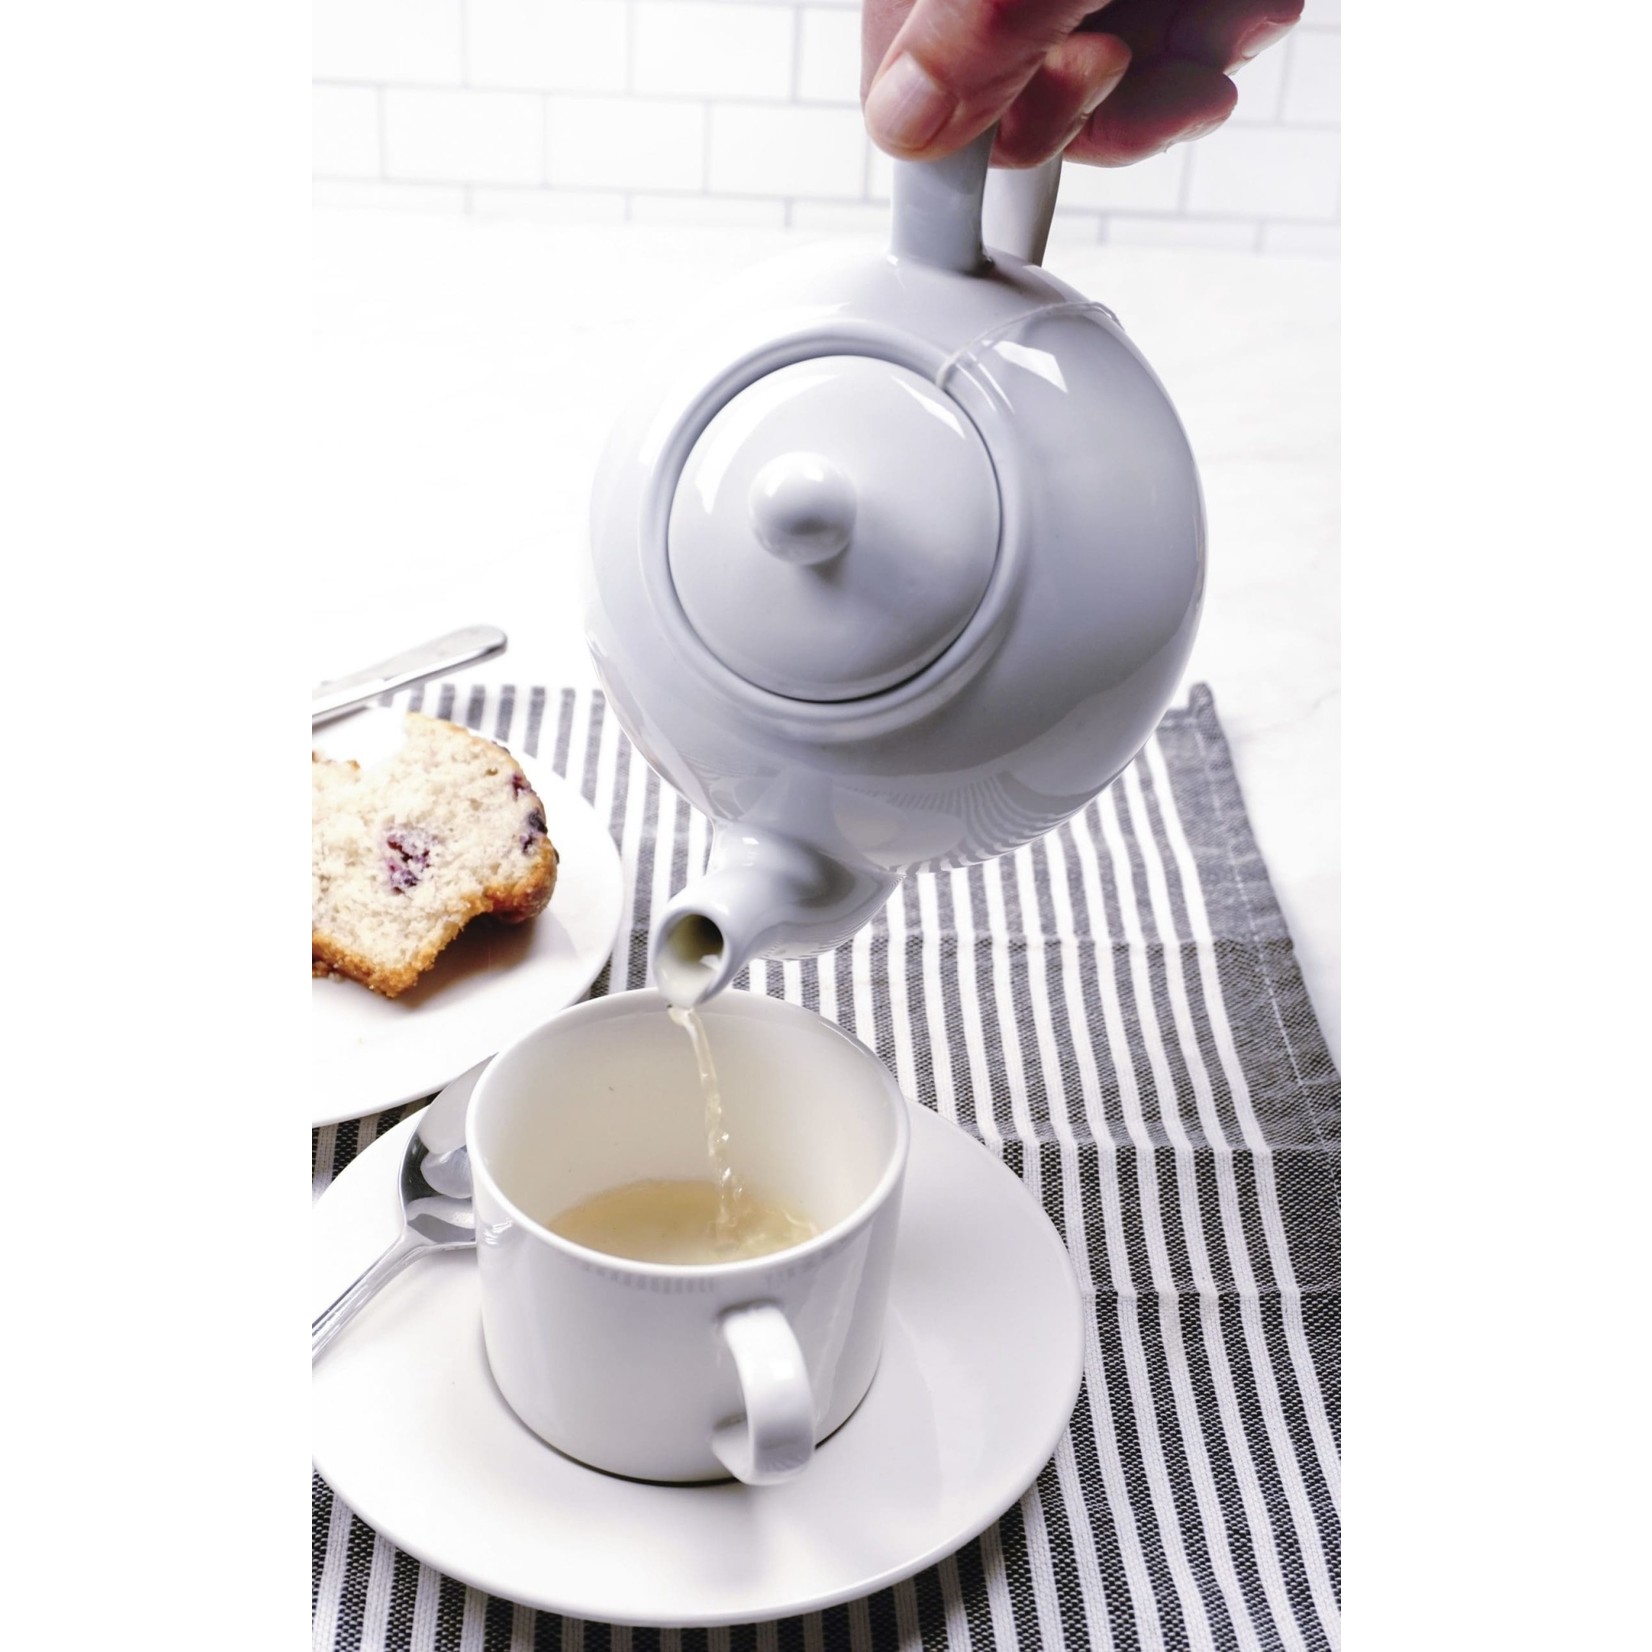 RSVP RSVP Stoneware Teapot - White DNR